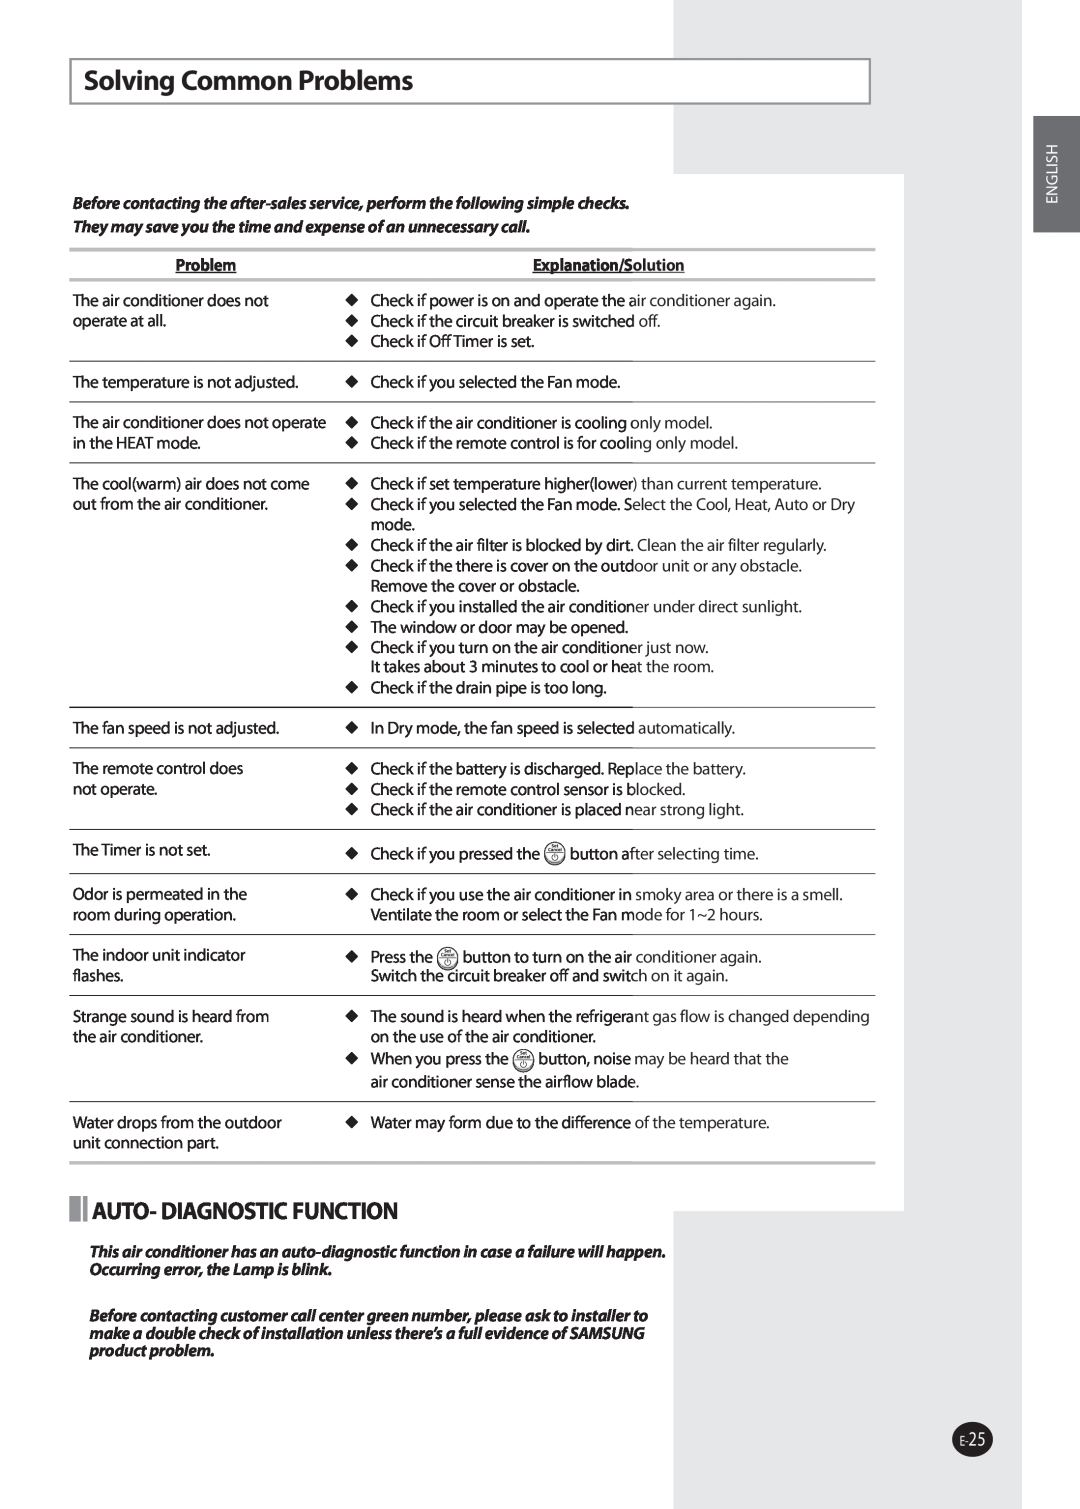 Samsung NS070NHXEA, NS035NHXEA manual Solving Common Problems, Auto- Diagnostic Function, Explanation/Solution, English 